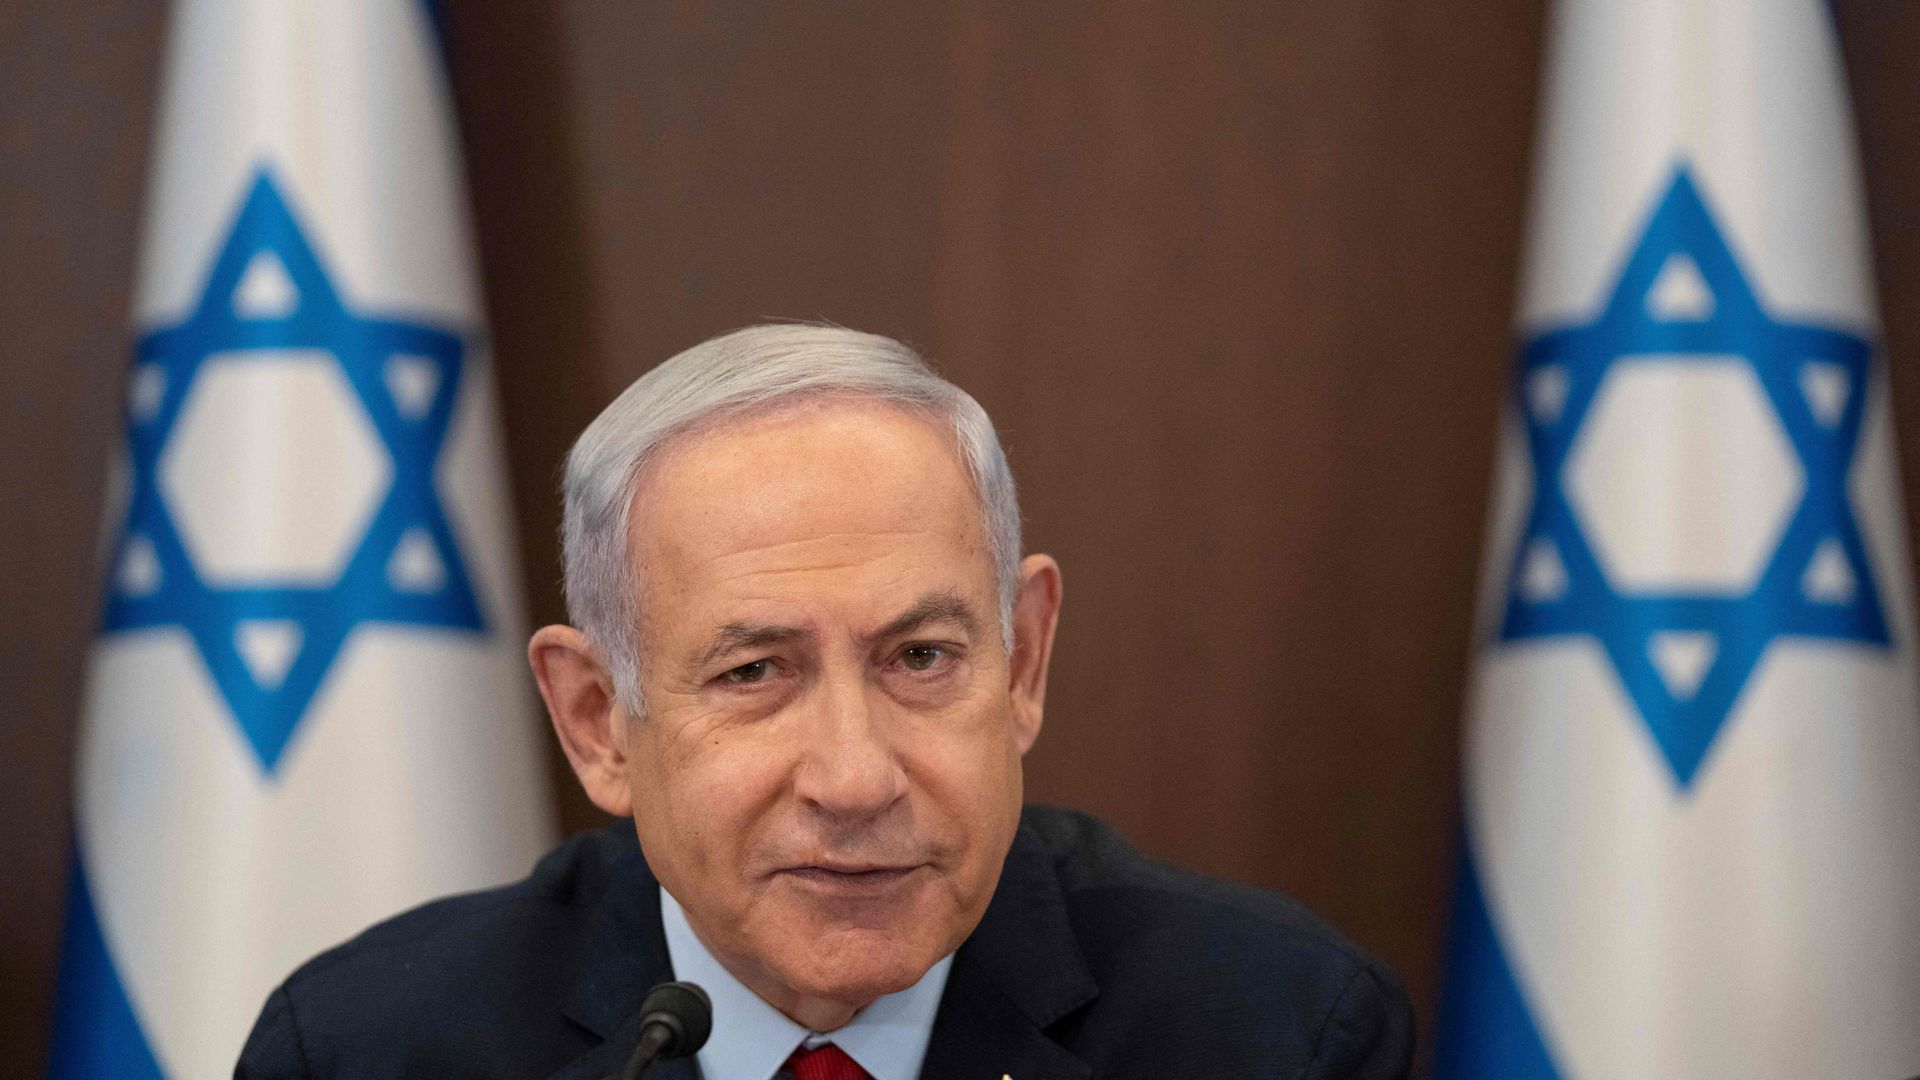 Israeli Prime Minister Benjamin Netanyahu. Photo: Ohad Zwigenberg/AFP via Getty Images